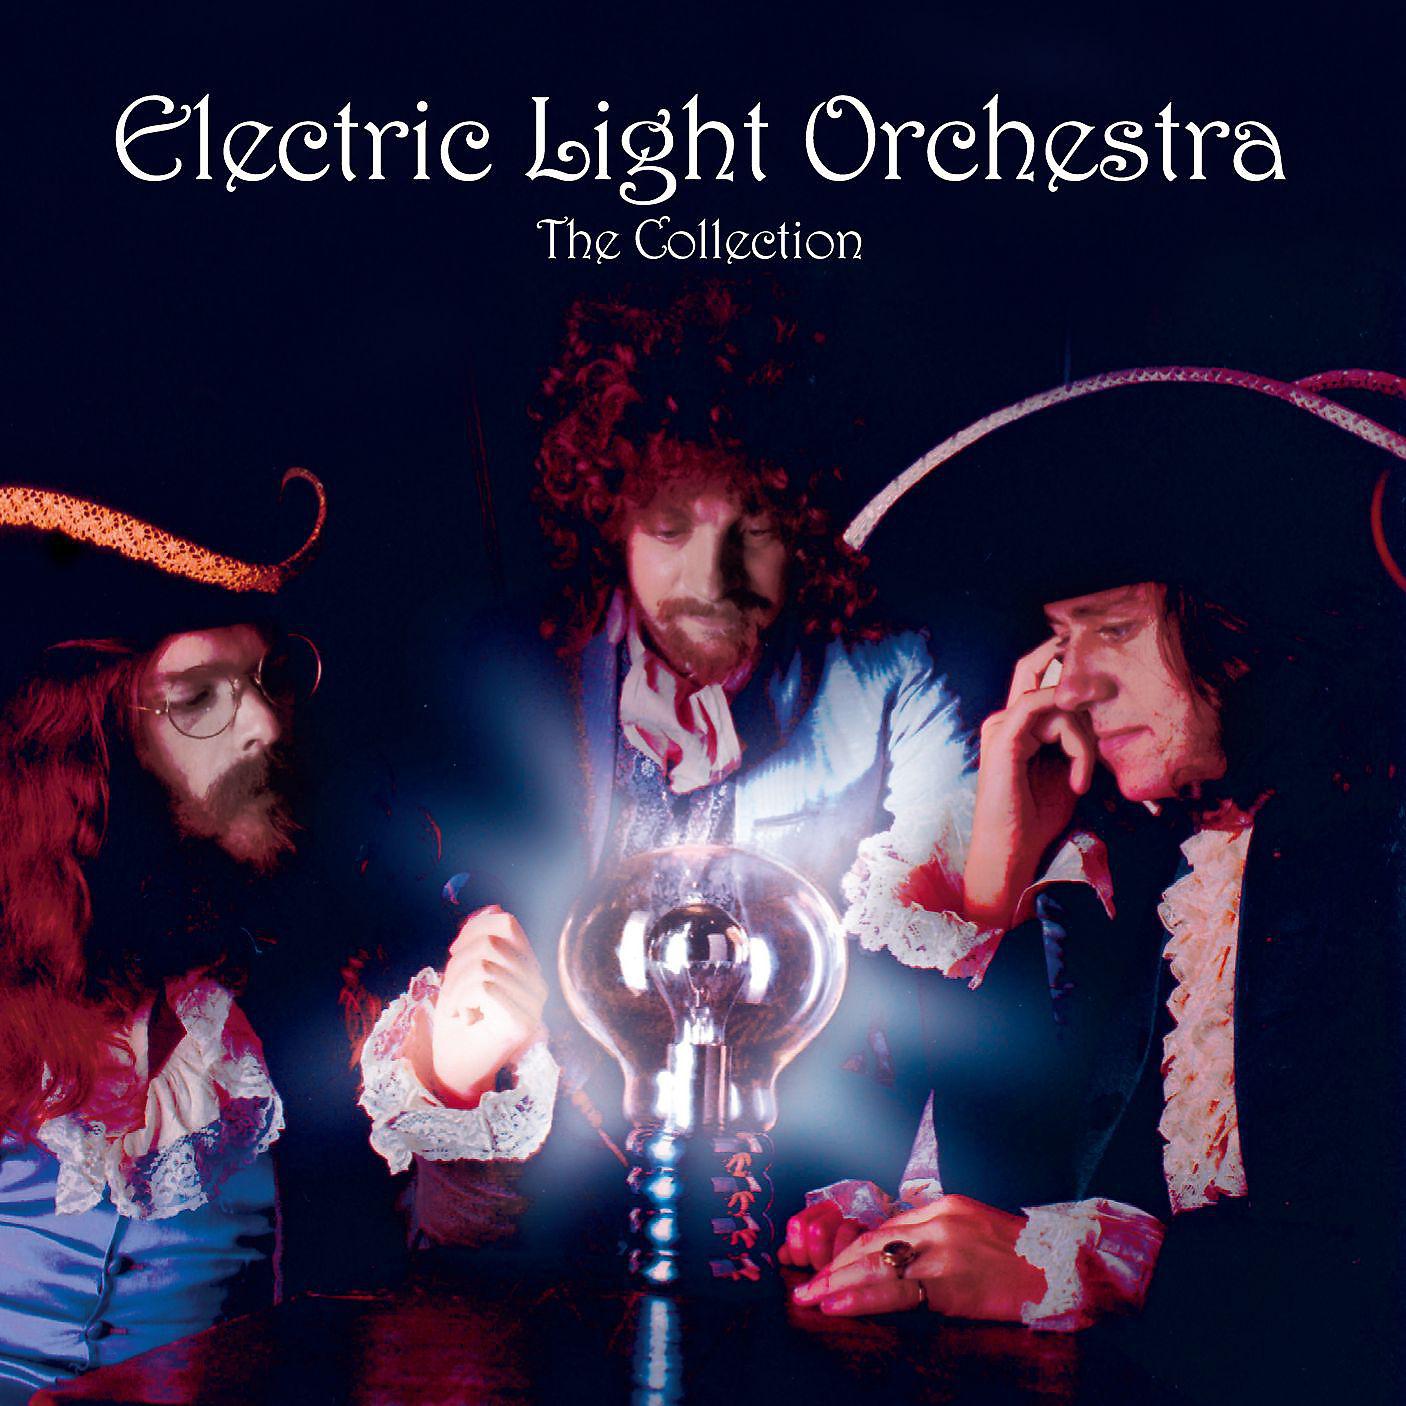 Электрический свет группа. Elo группа. Electric Light Orchestra. Группа Electric Light Orchestra дискография. Electric Light Orchestra группа фото.